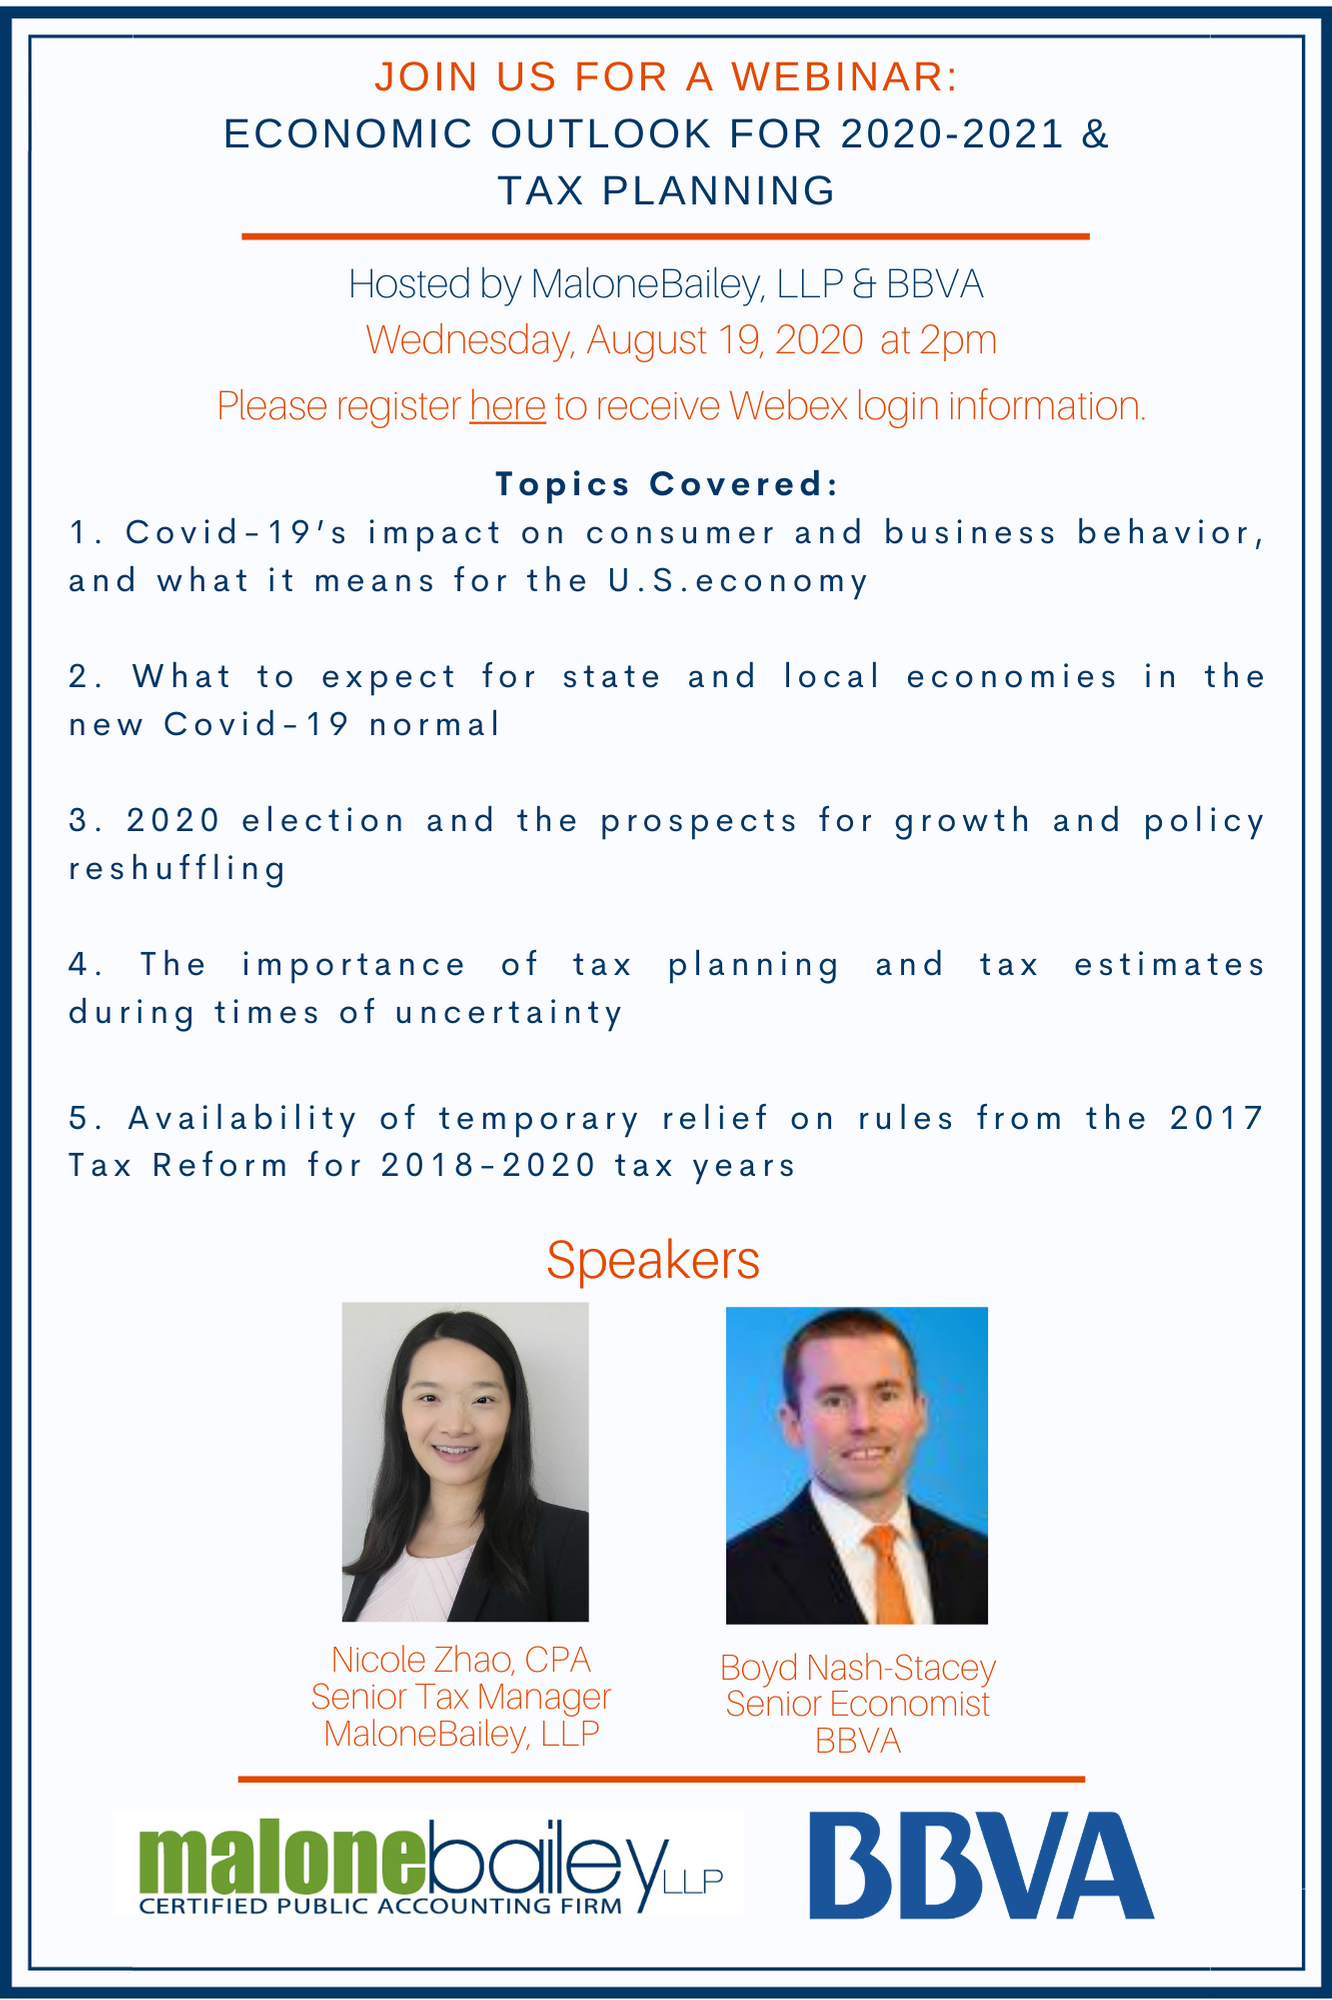 MaloneBailey & BBVA Webinar: Economic Outlook and Tax Planning